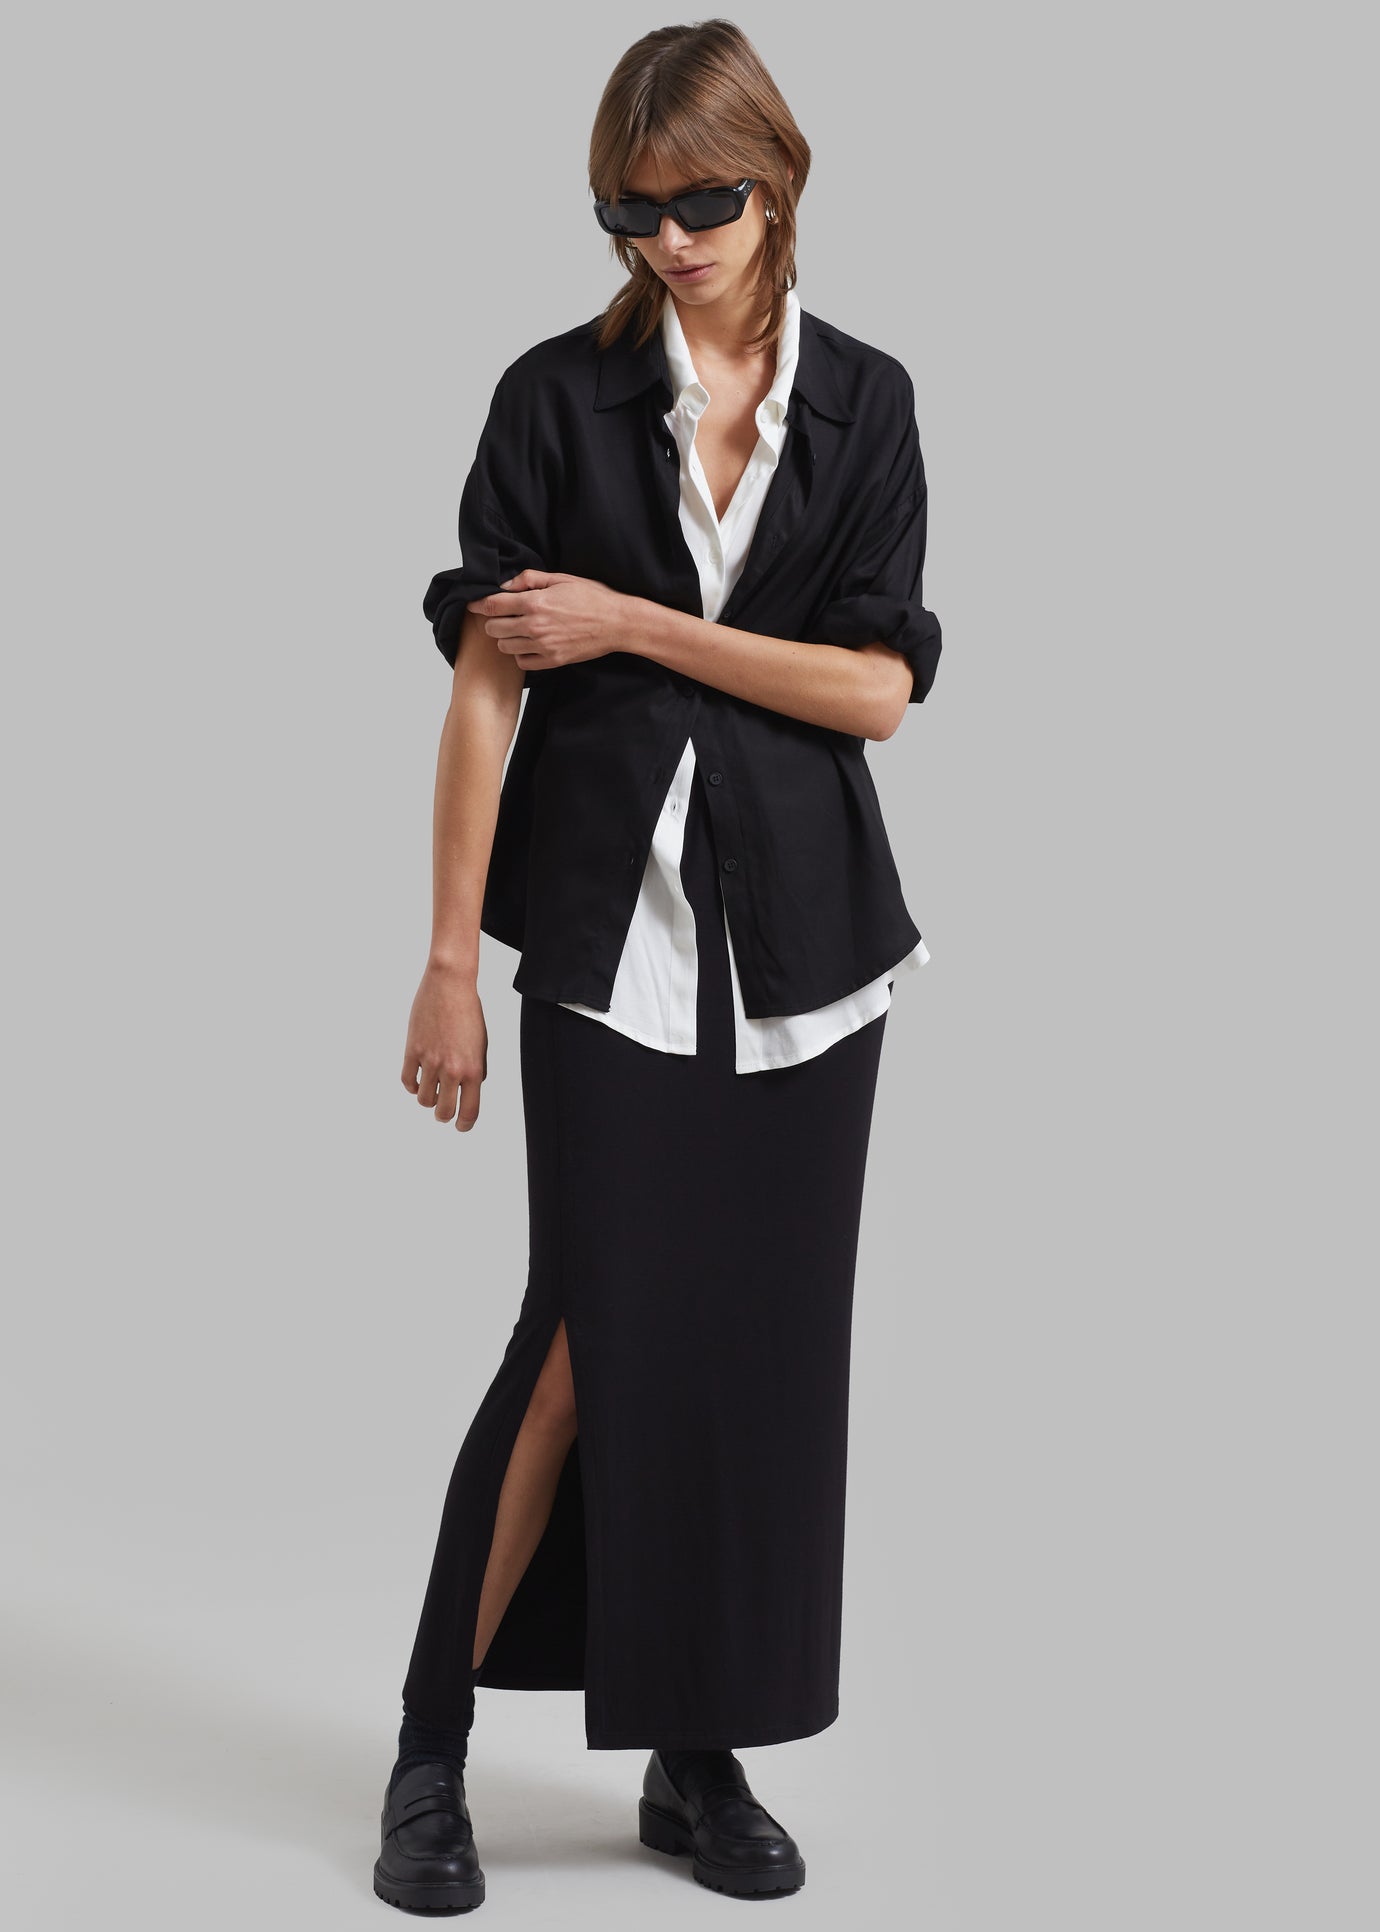 Ann Double Layer Shirt - Black/White - 1